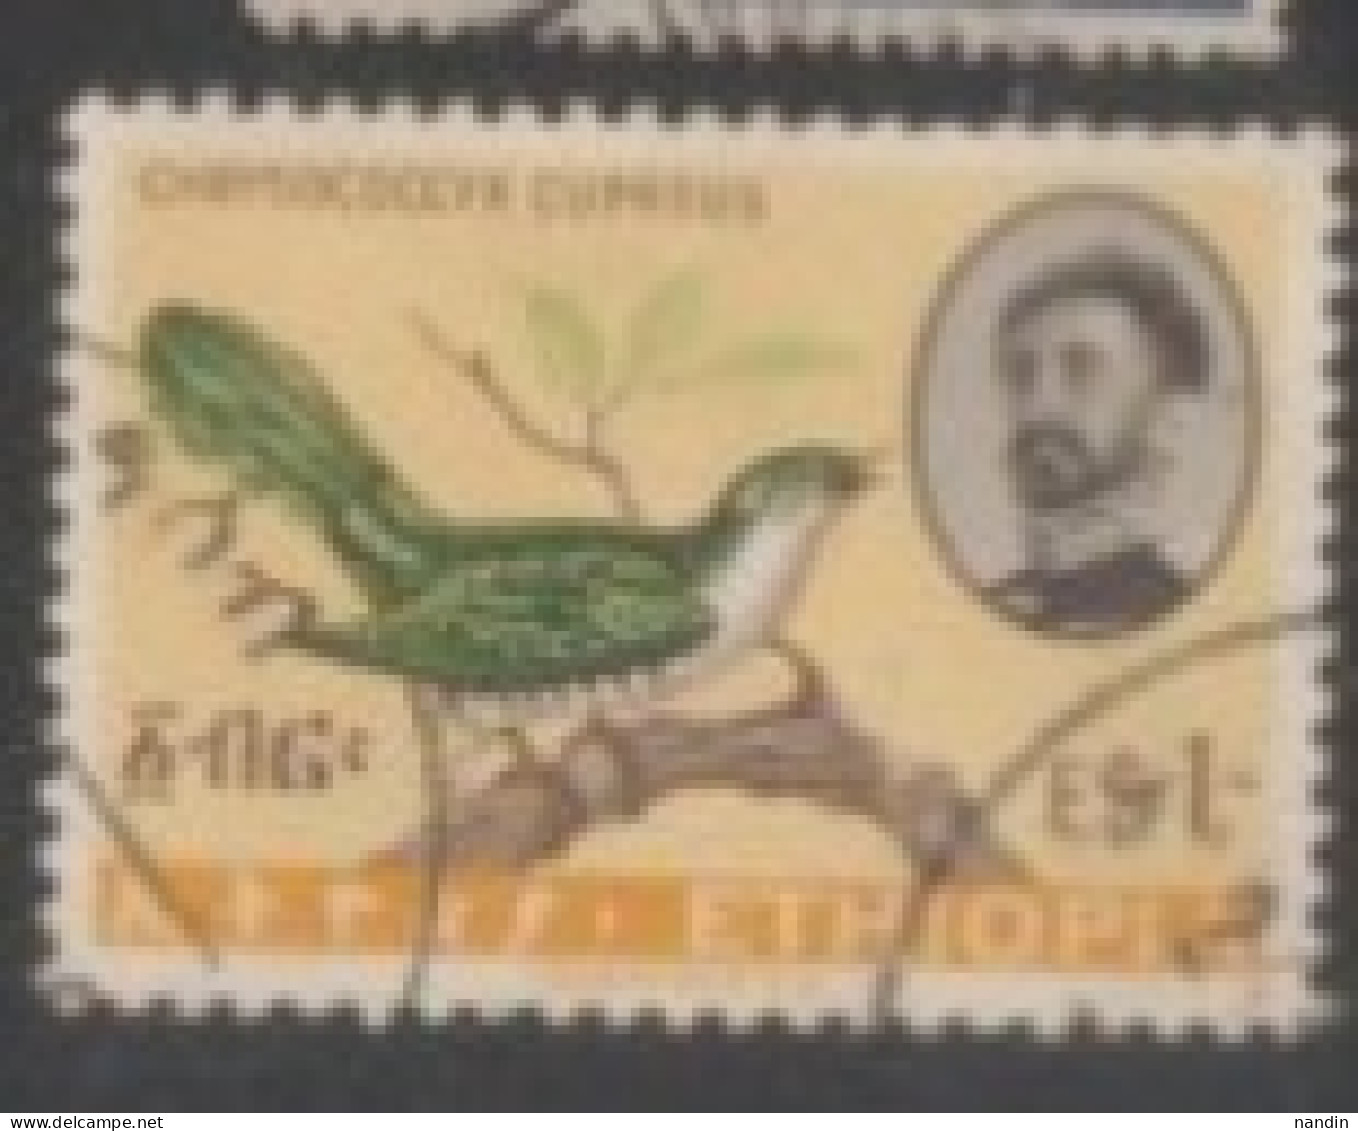 1962 ETHIOPIA USED STAMP ON BIRD/Chrysococcyx Caprius-Diederik Cuckoo - Cuckoos & Turacos